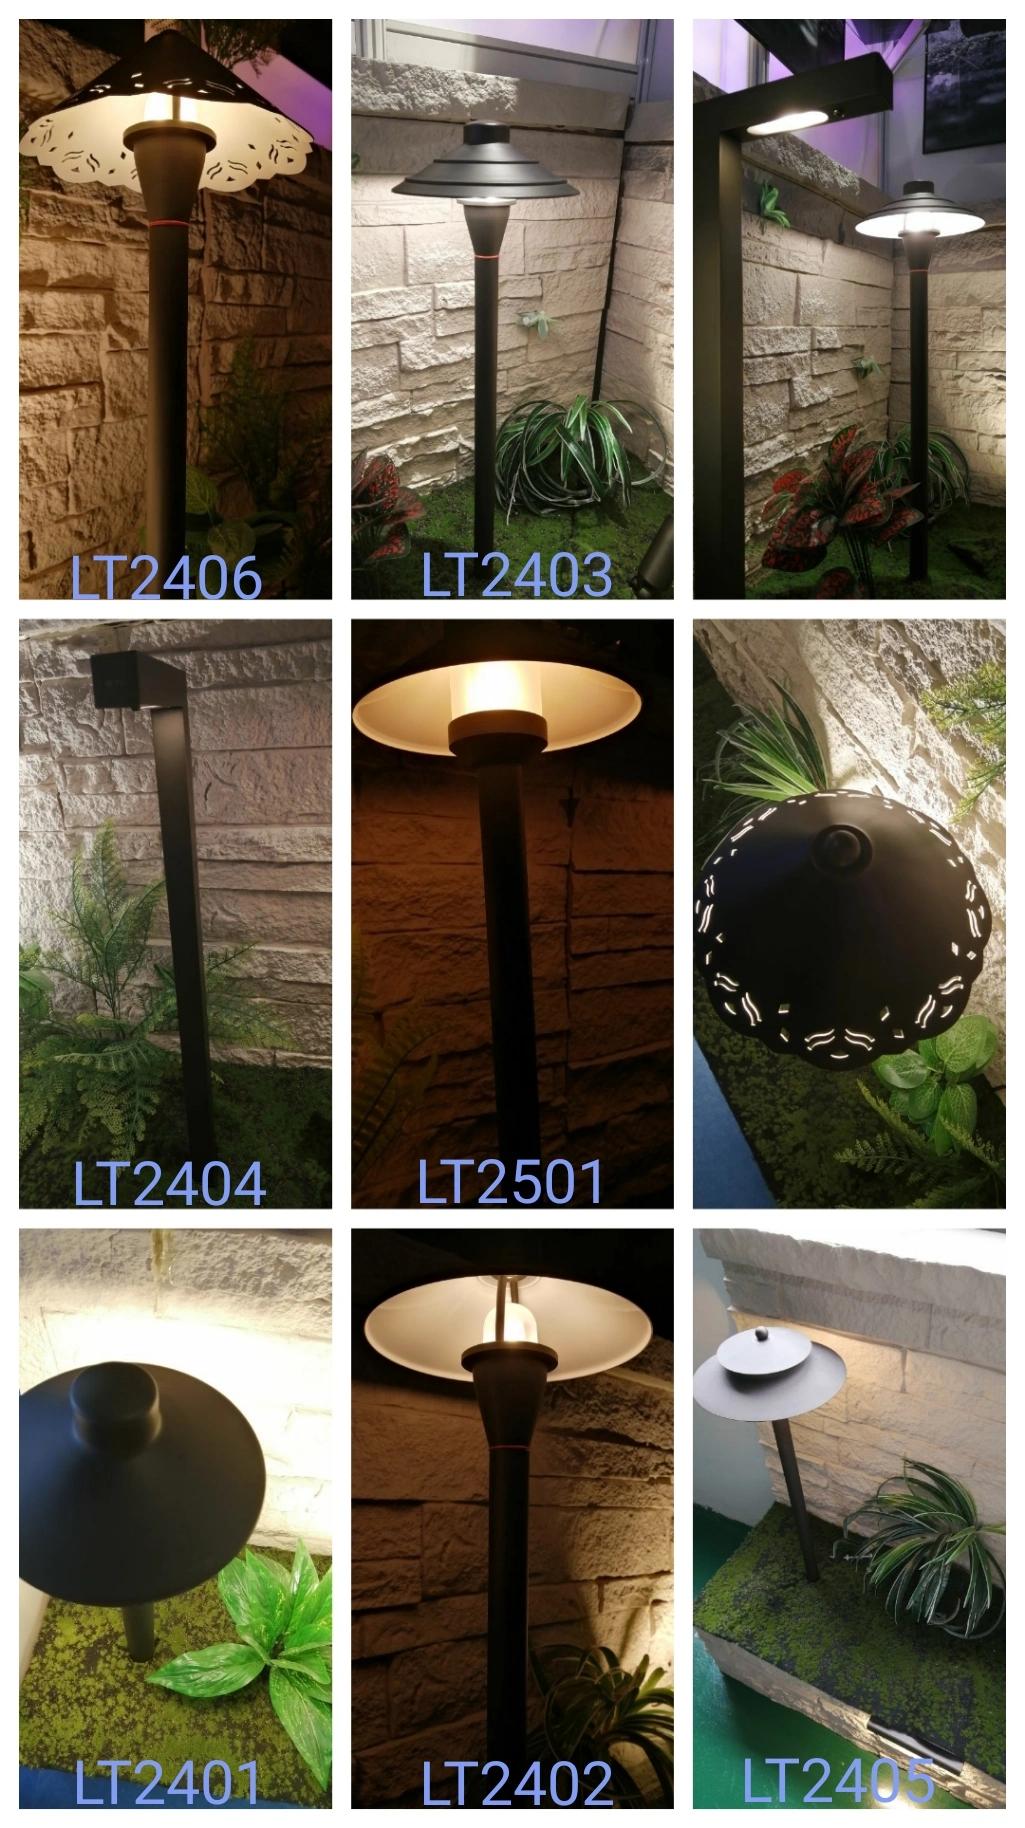 Lt2404 Hot Sale Brass Die Cast Outdoor Rectangular Path Light for Low Voltage Landscape Lighting with G4 Bulb & Bronze Finish